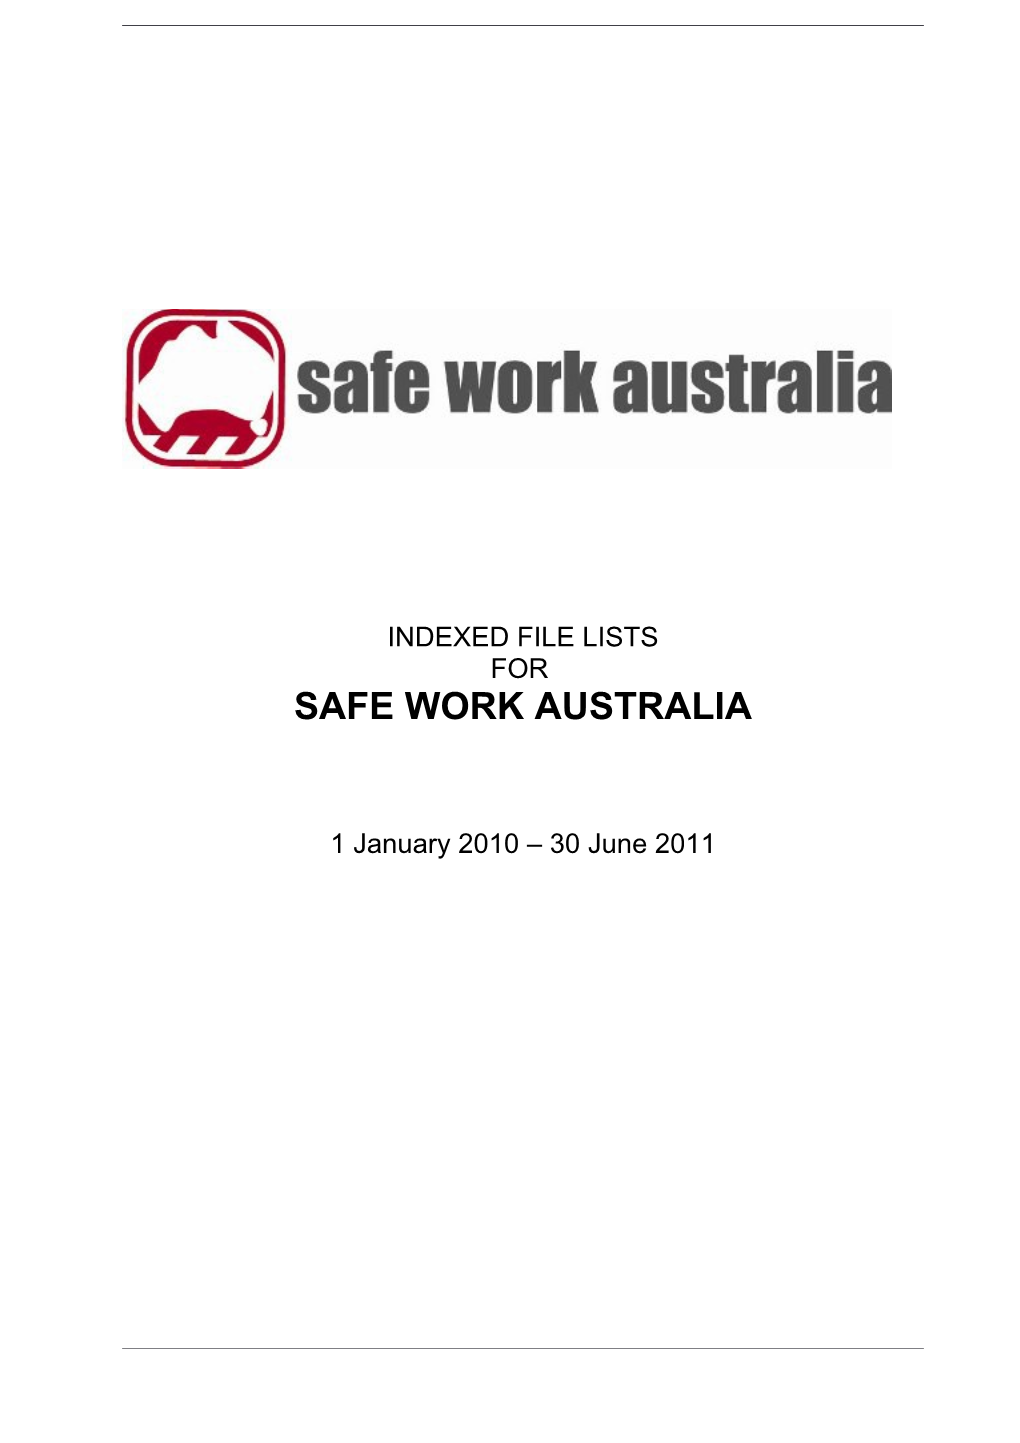 INDEXED FILE LISTS for Safe Work Australia